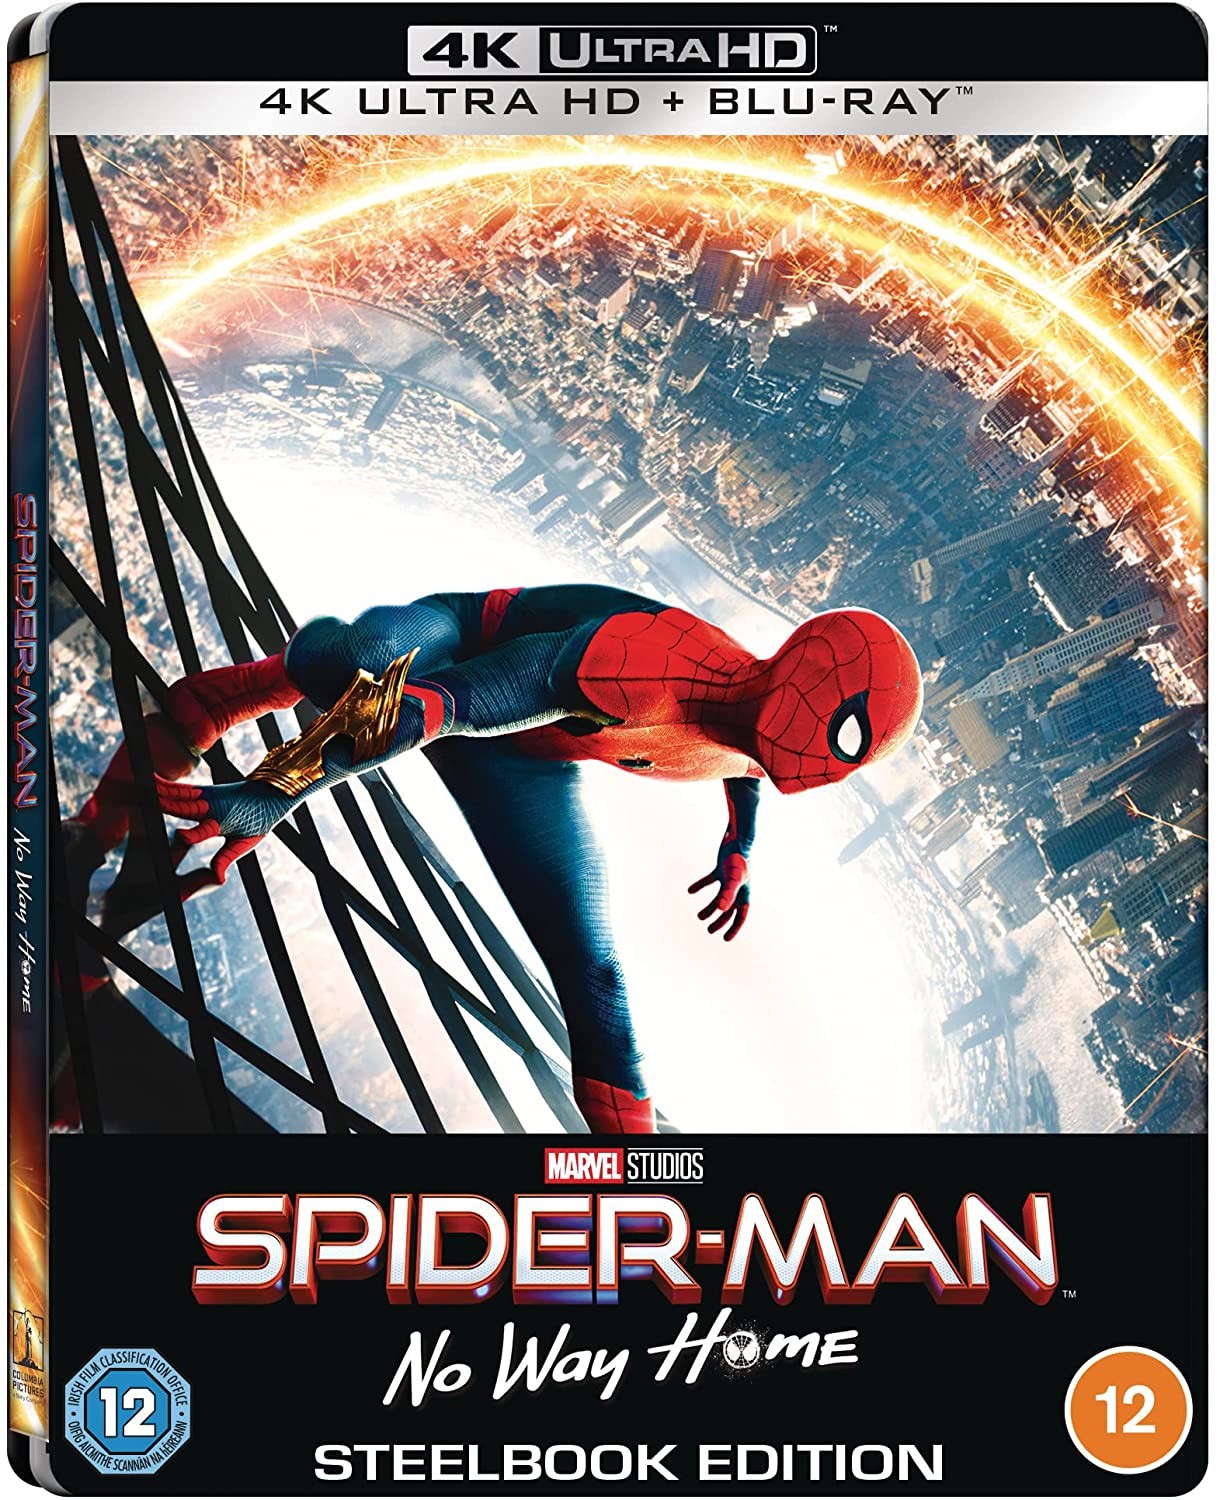 Spider-Man: Bez drogi do domu steelbook 4K UHD